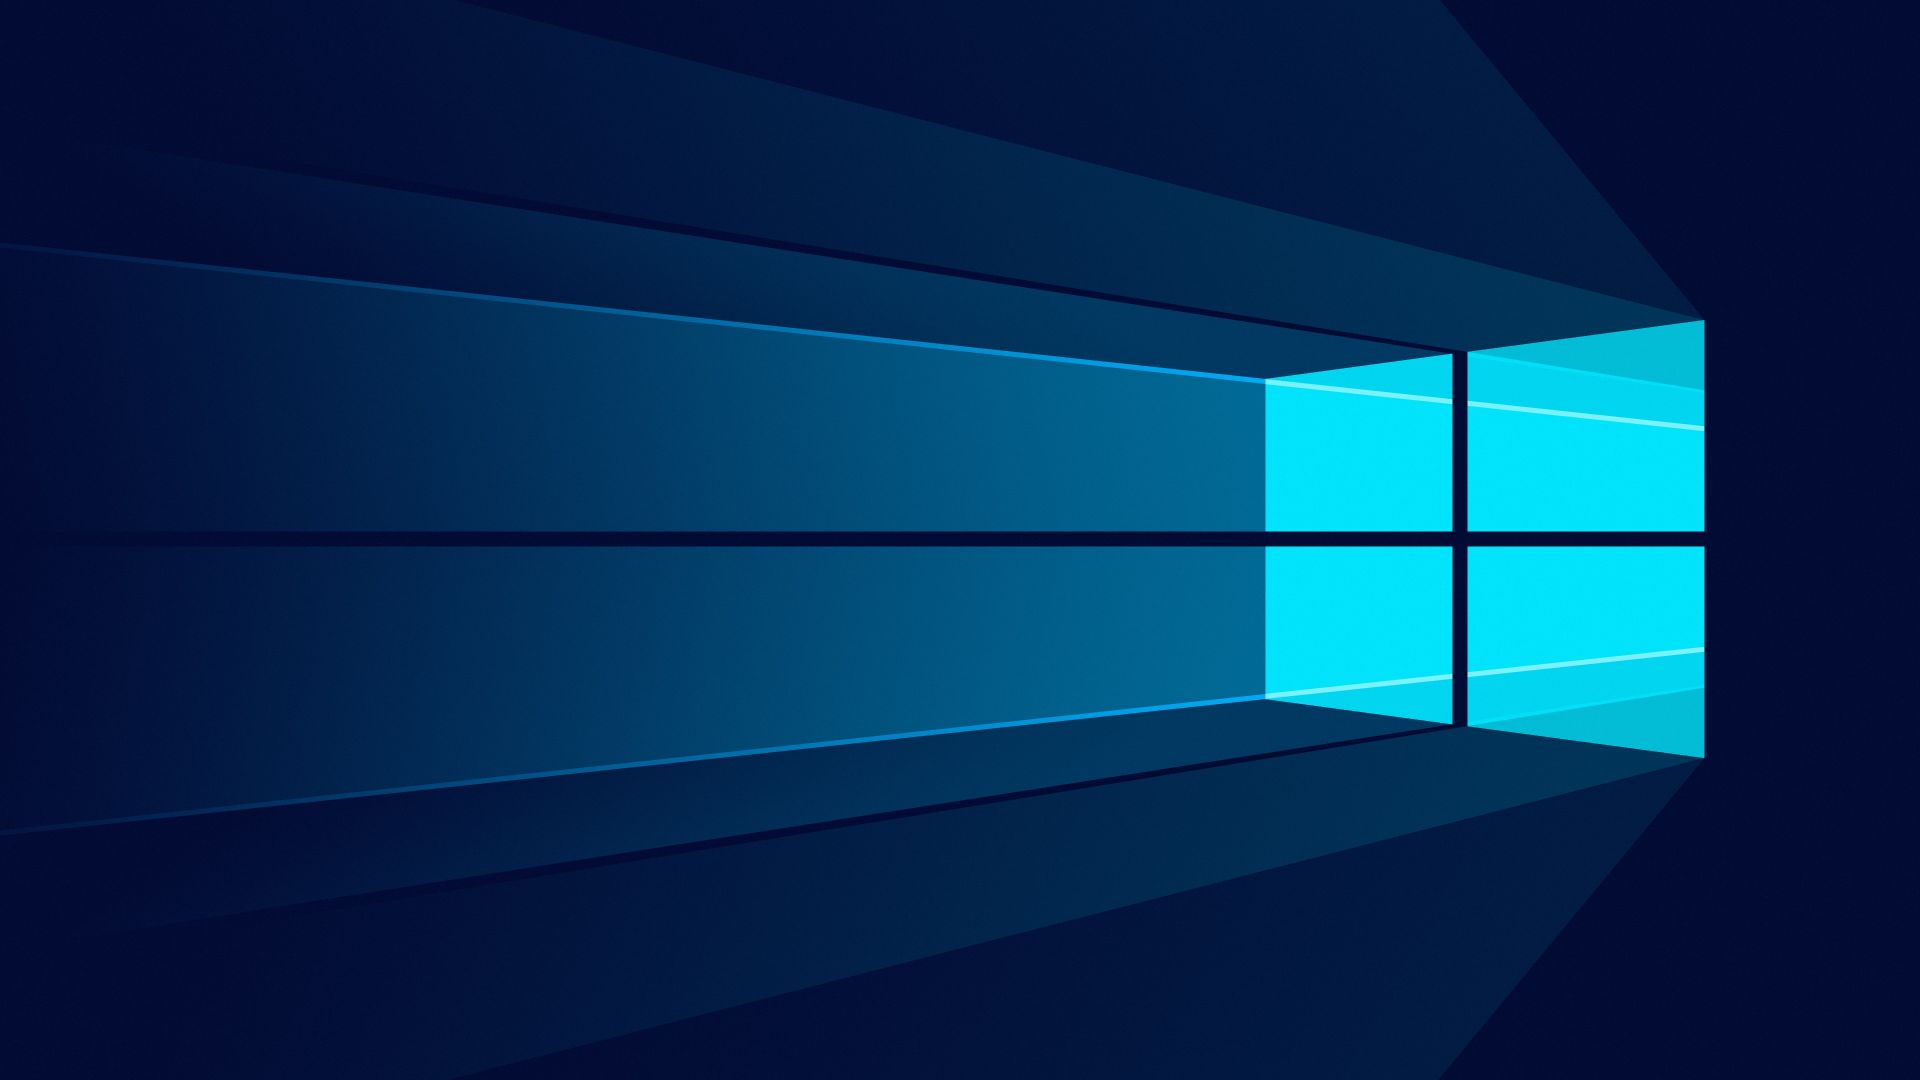 Windows 10 Backgrounds, Super Windows 10 Wallpaper ...